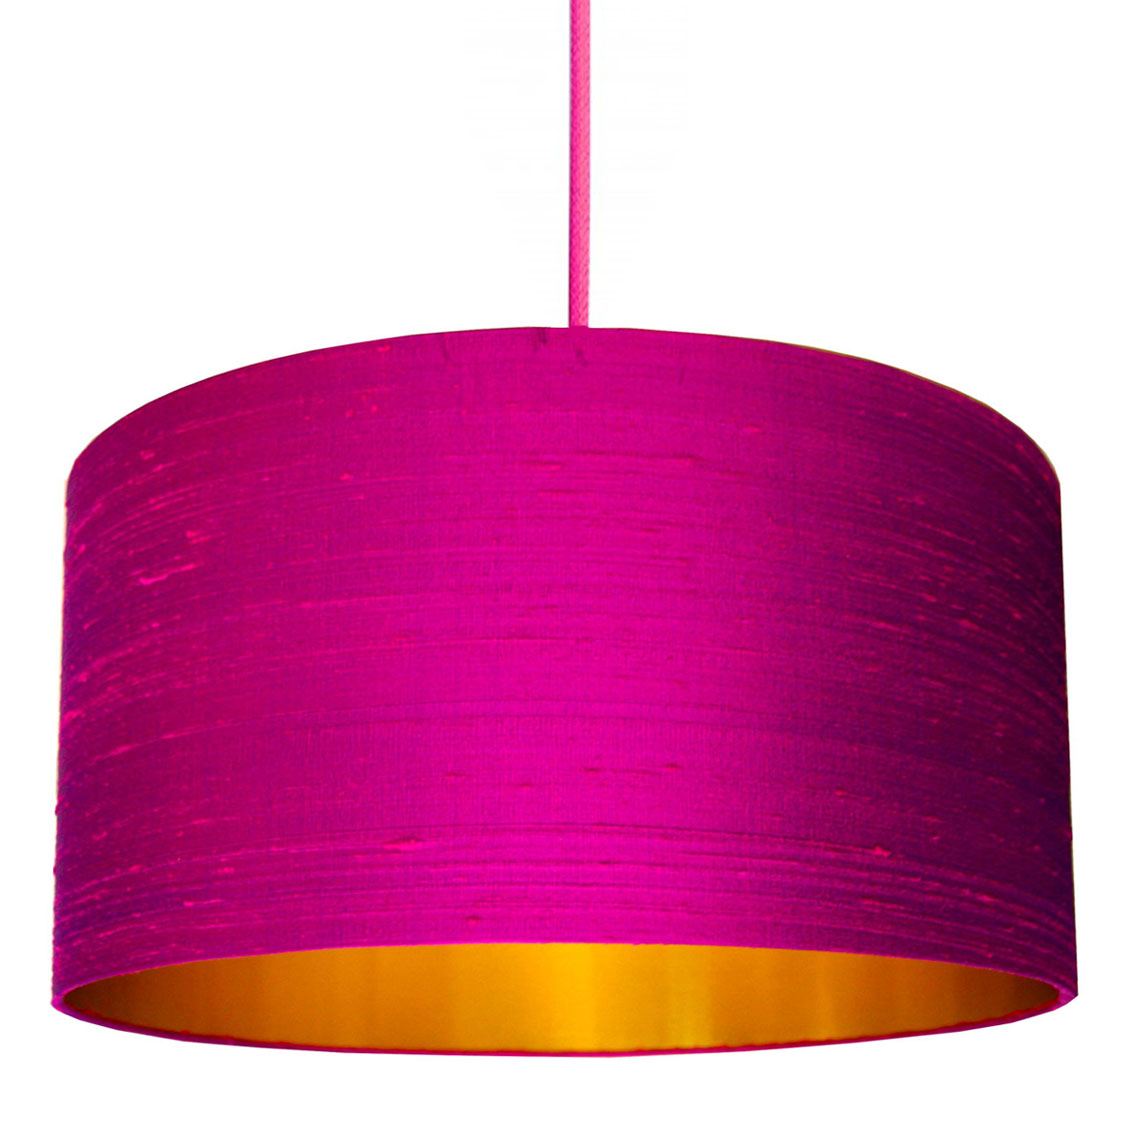 20cm Hot Pink Fuschia Grey Retro Geometric Handmade Giclee Style Printed Fabric Lamp Drum Lampshade Floor or Ceiling Pendant Light Shade 352 8 